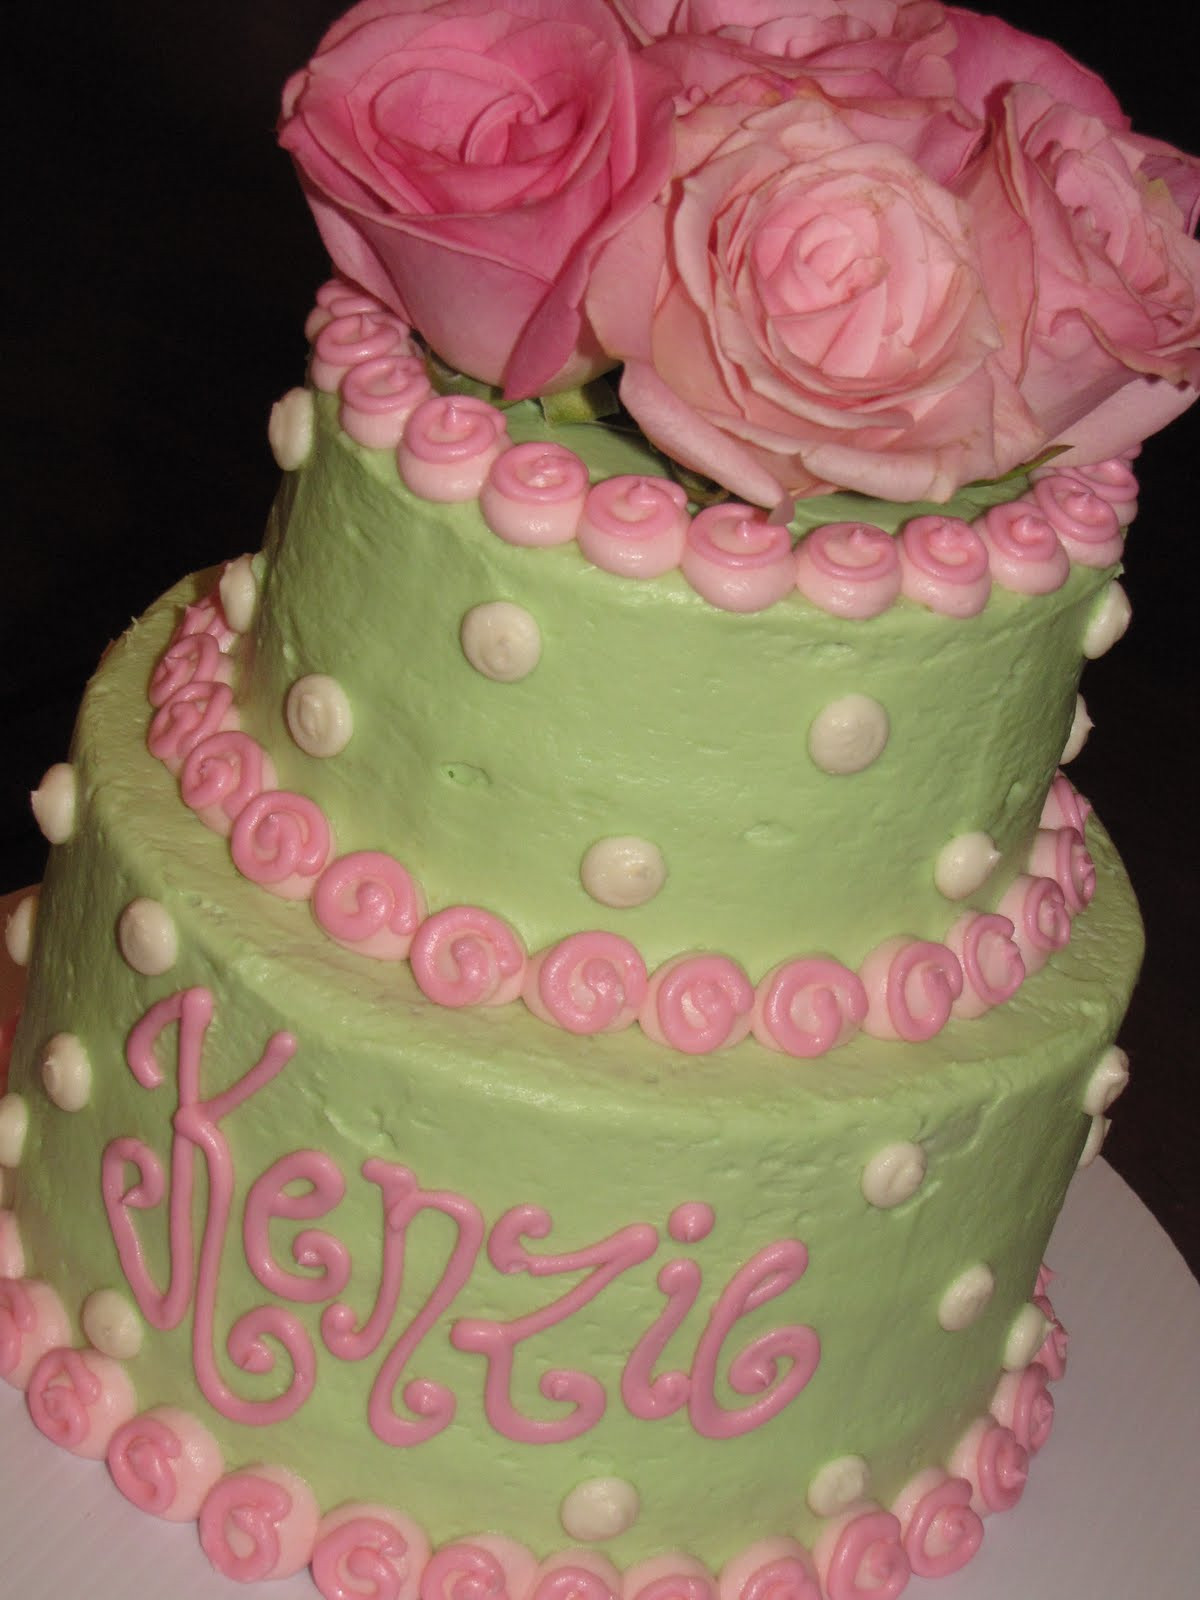 Shabby Chic Birthday Cake
 Simply Charming Cakes Shabby Chic Birthday Cake